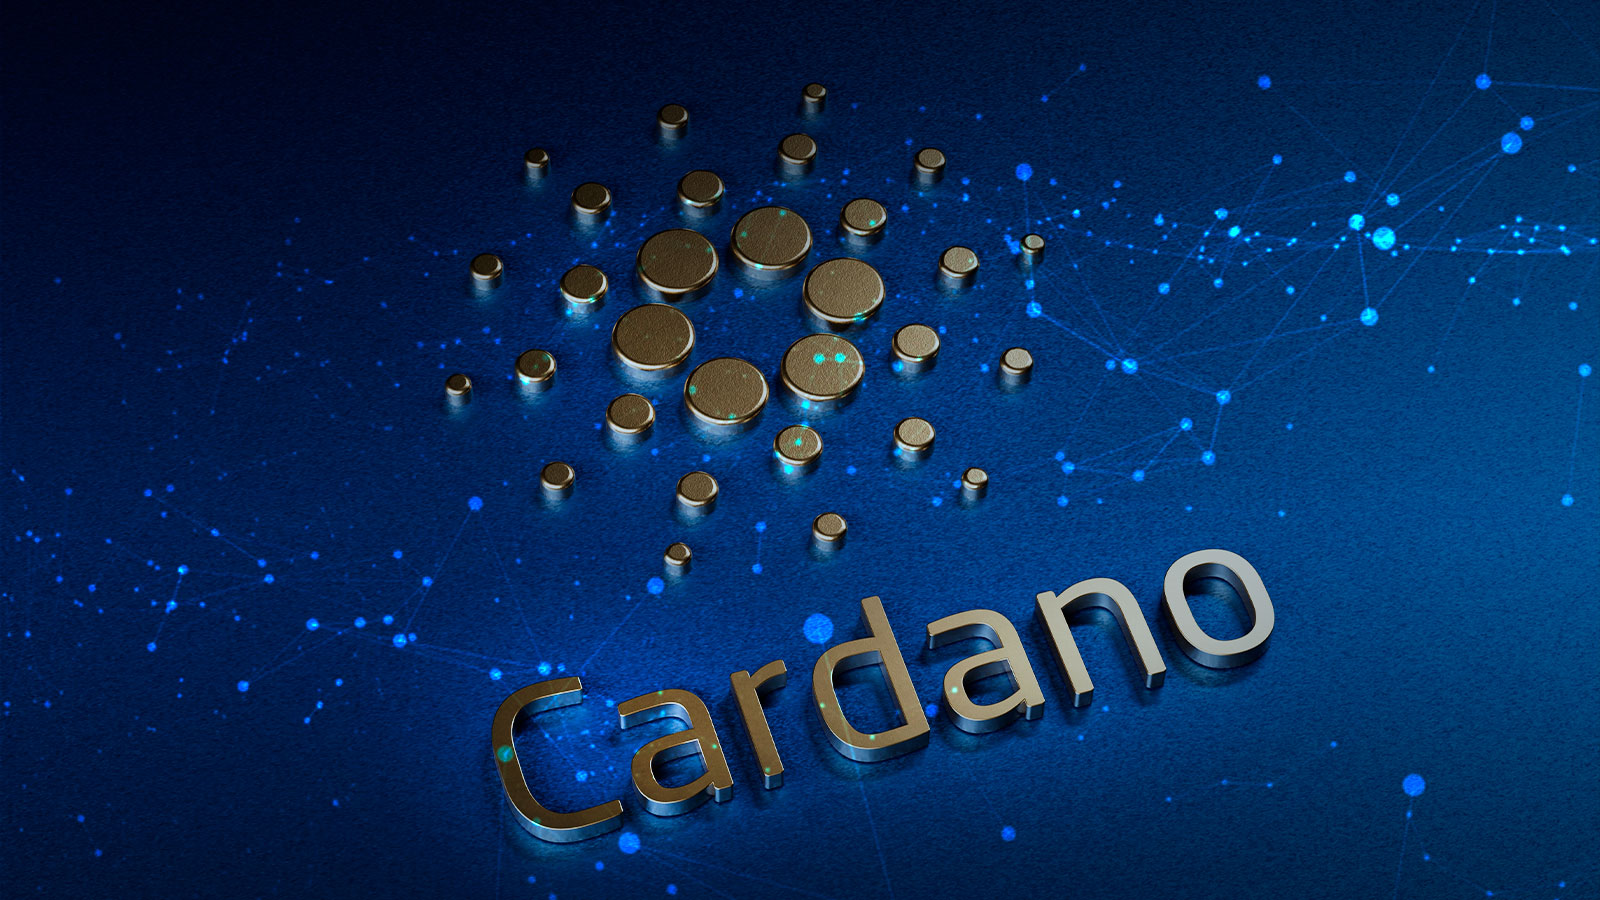 Cardano's Vasil Fork: How Close Is Cardano to Major Upgrade?